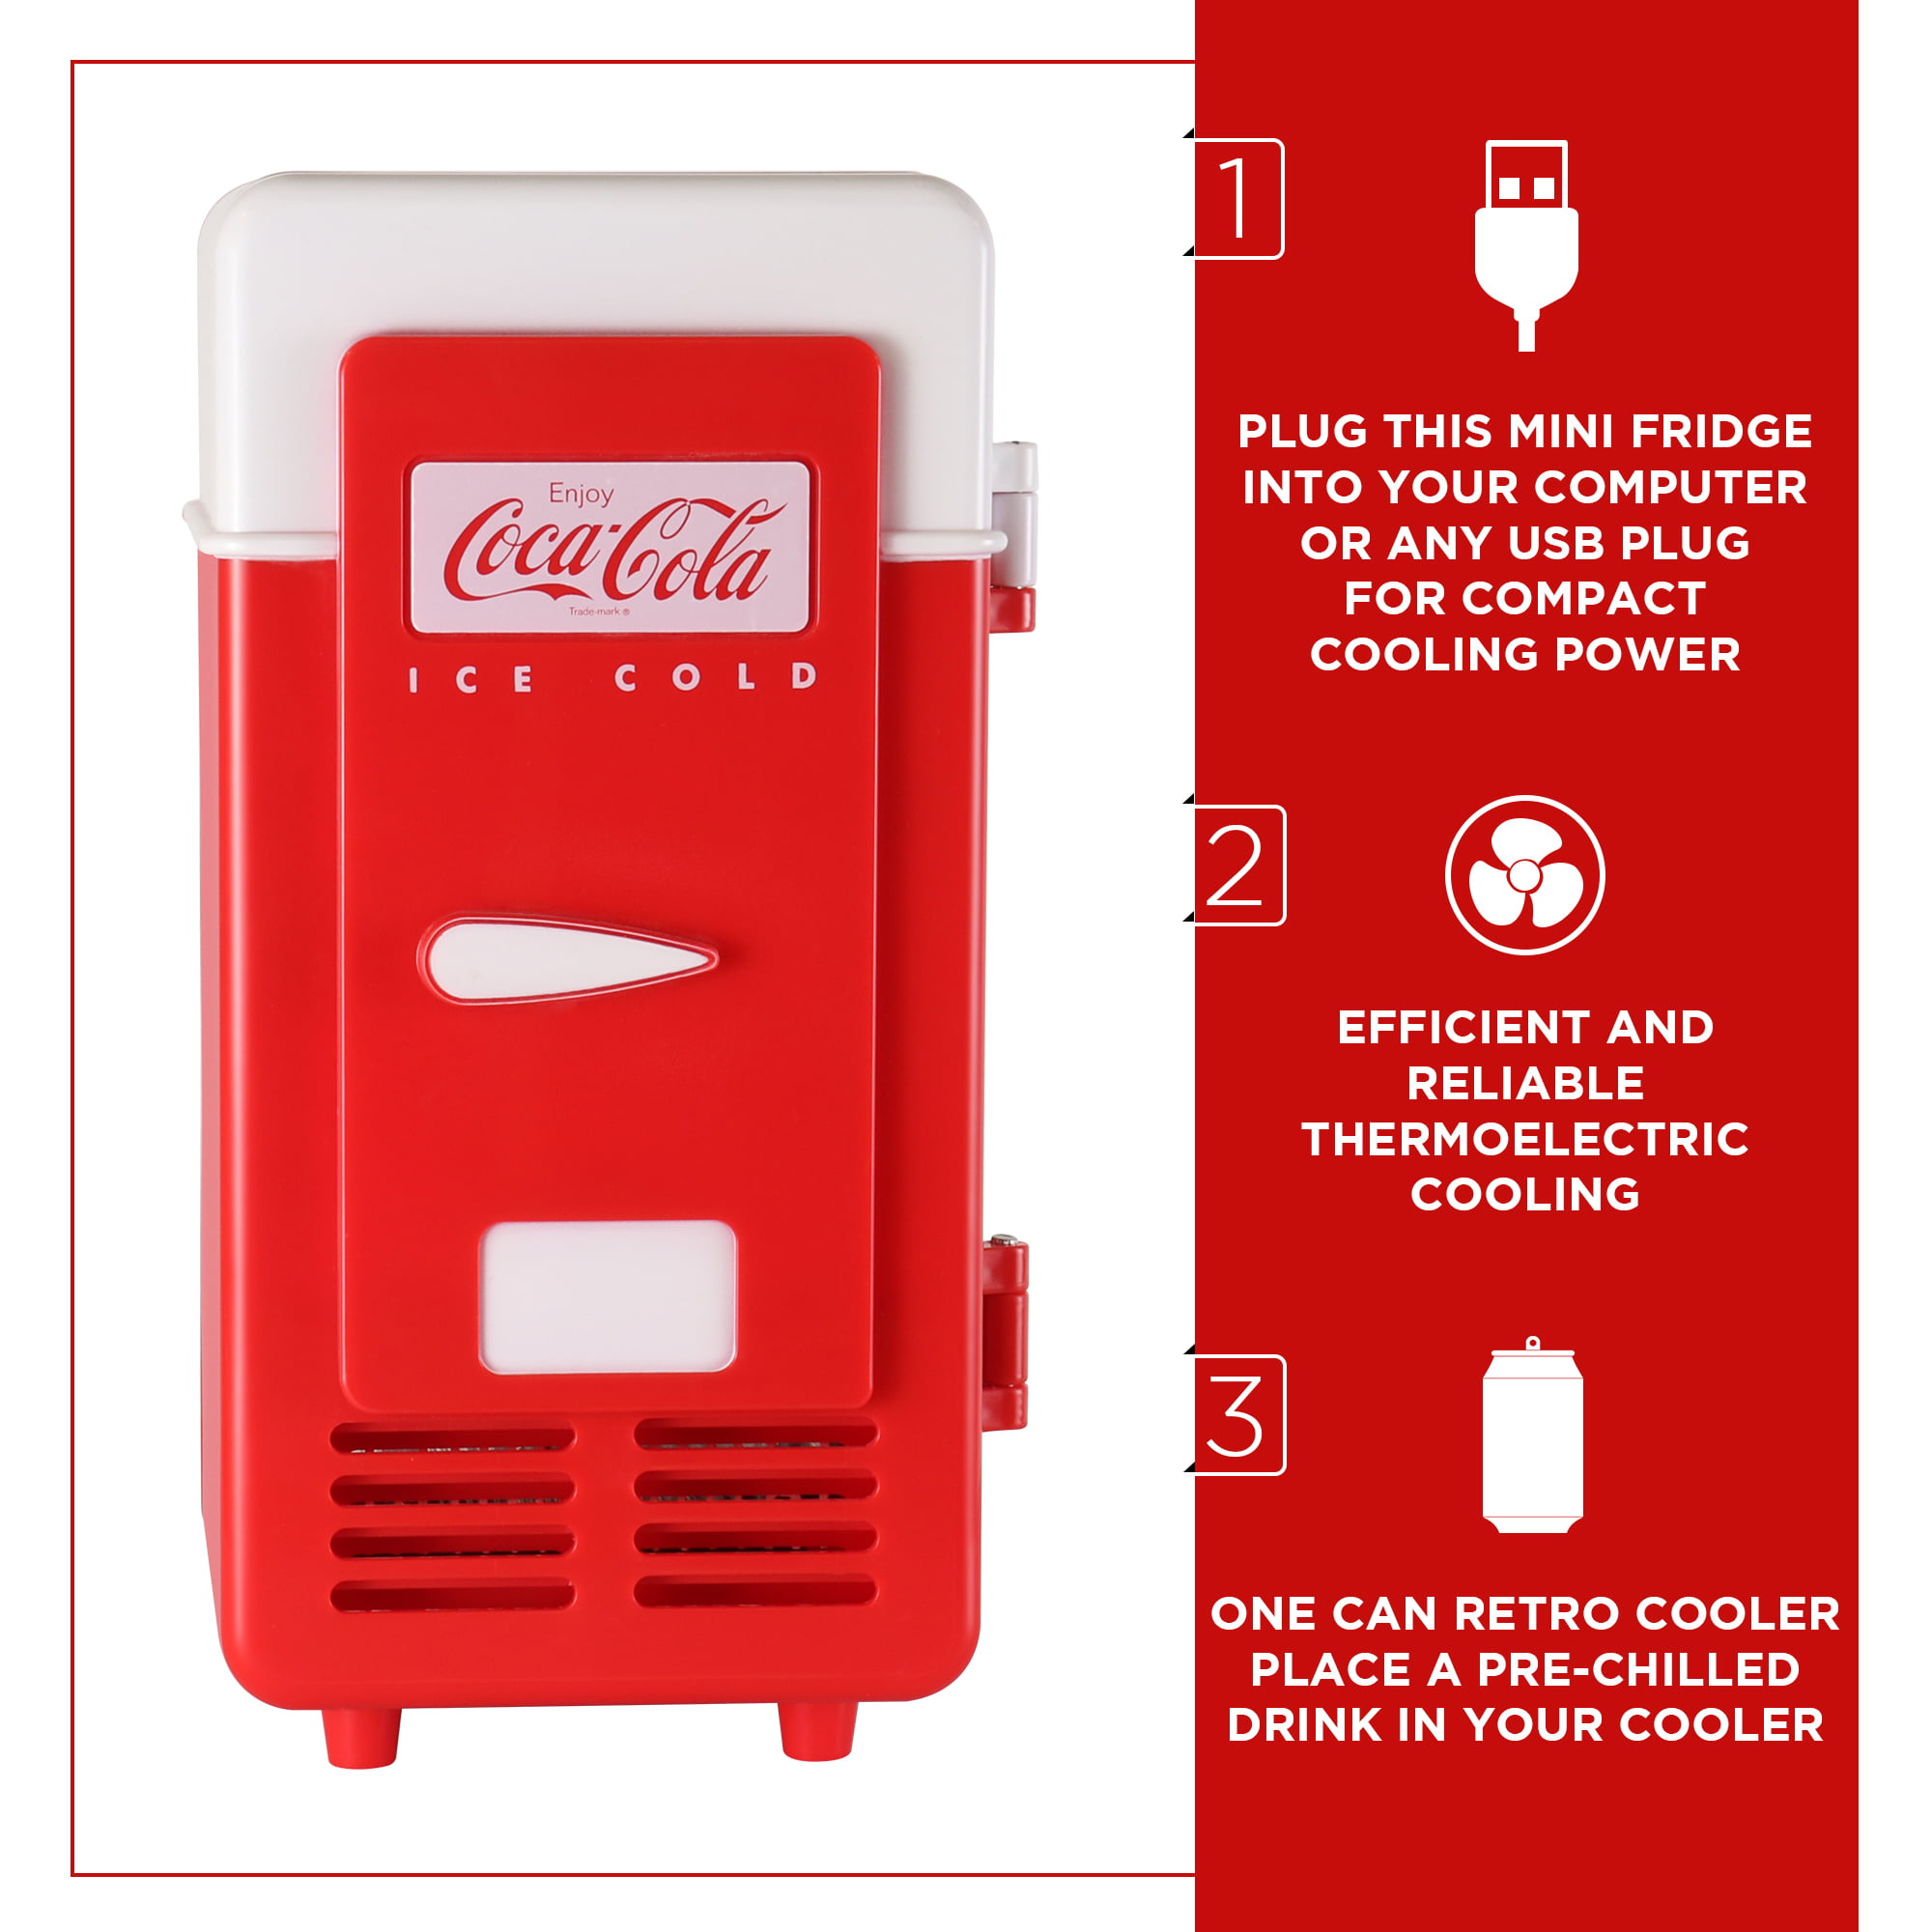 Coca-Cola Fridge Review (Thermoelectric Mini Fridge) - GrowDoctor Guides